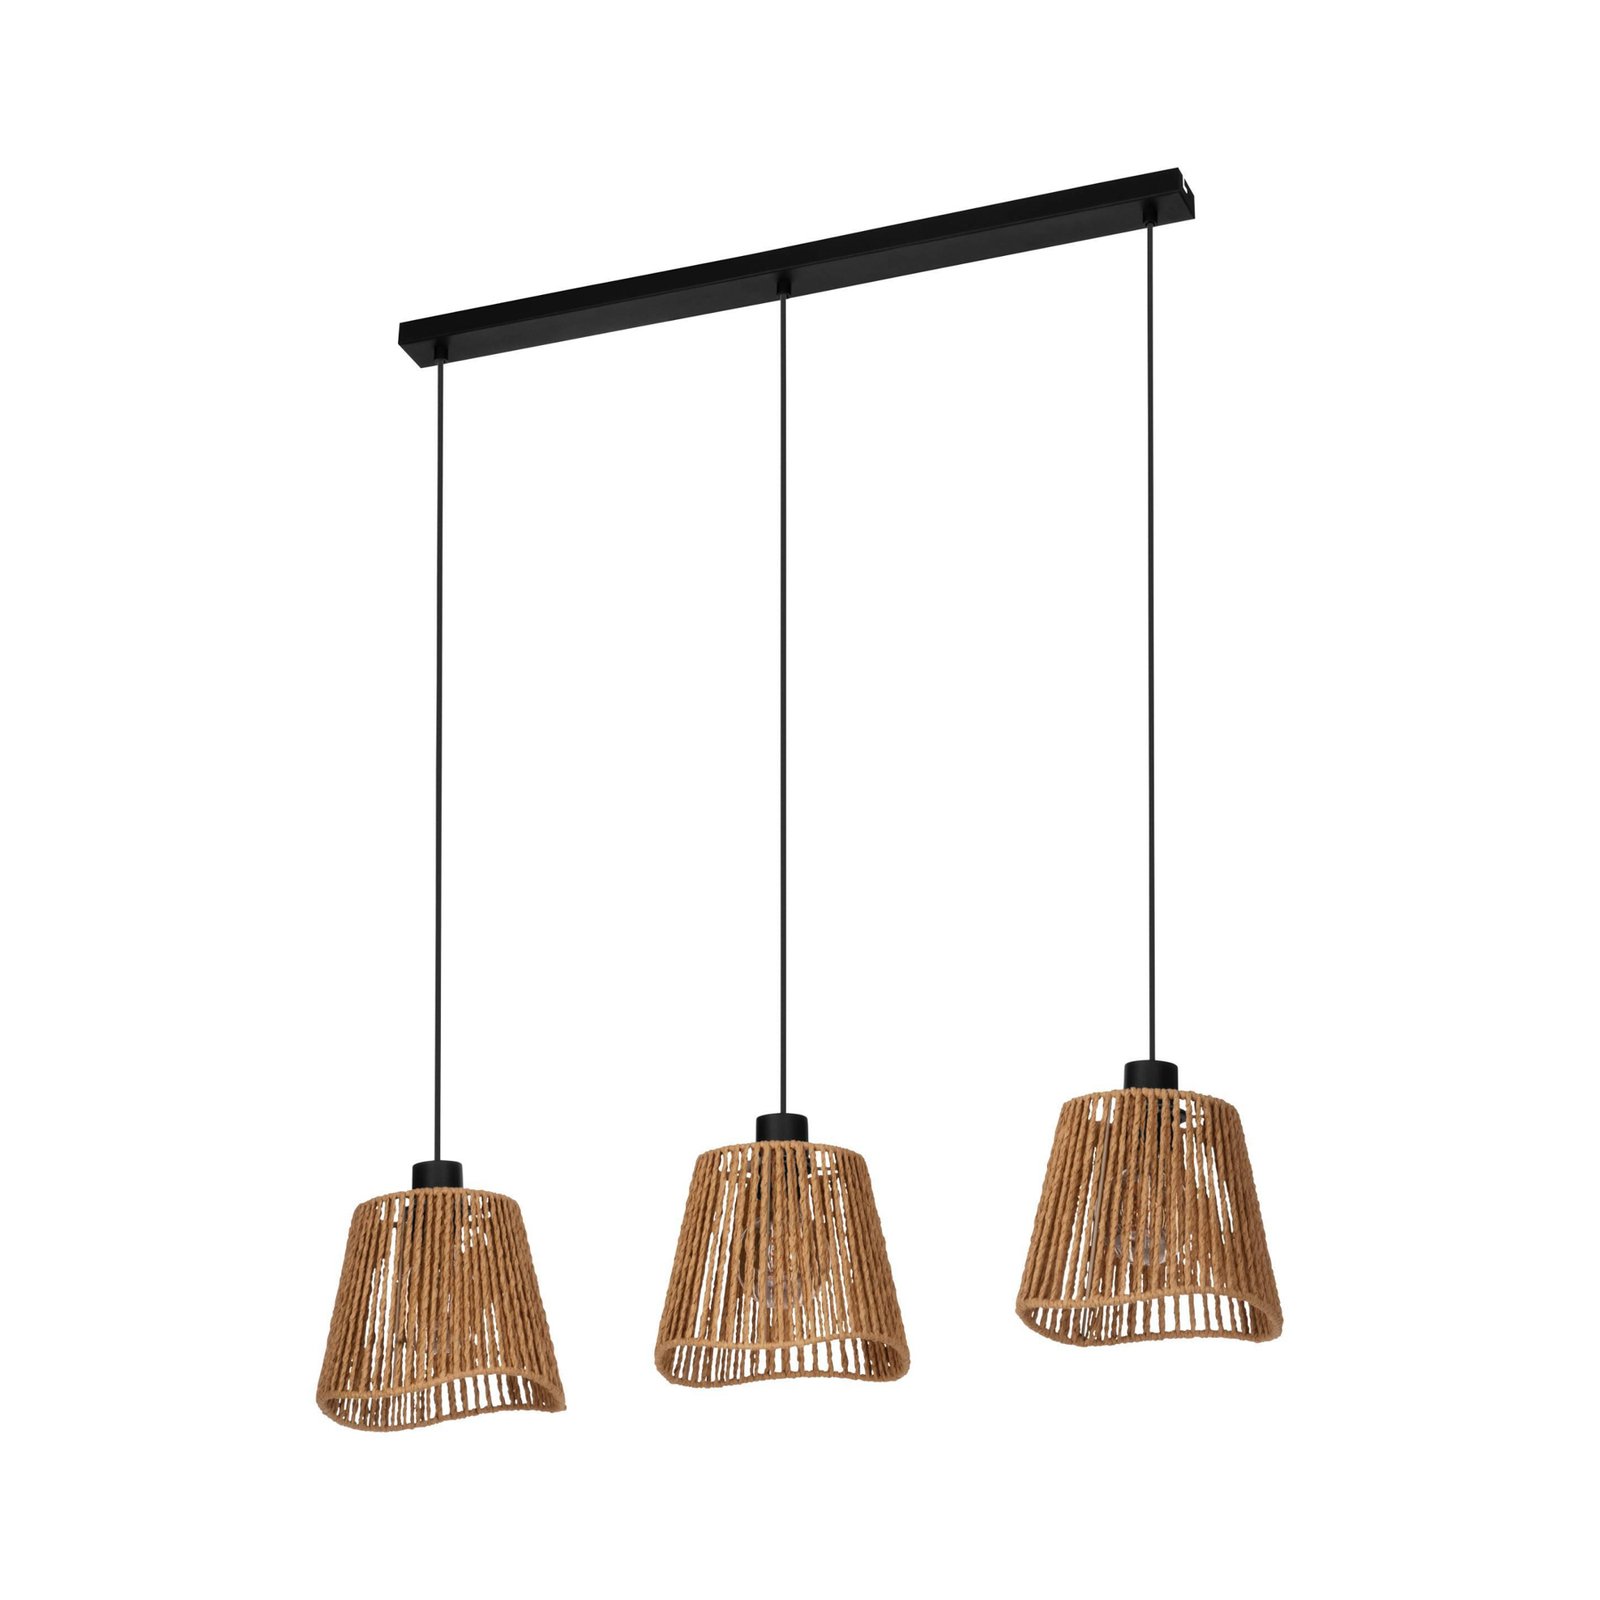 Lavister hanglamp, zwart/naturel, 3-lamps, papier